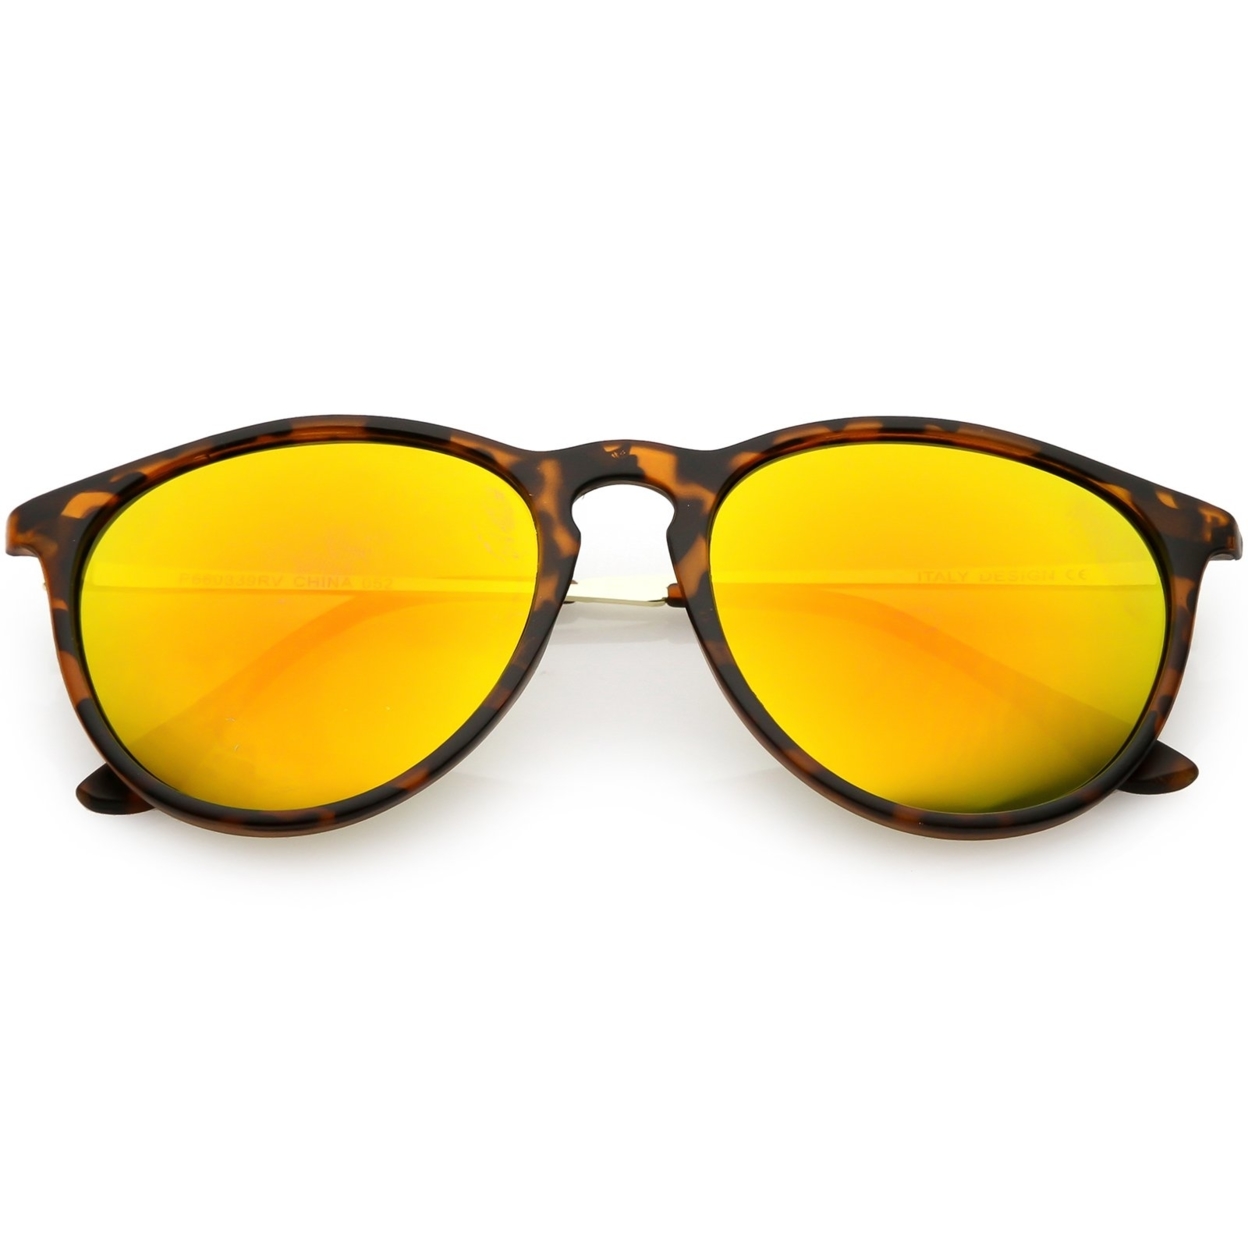 Modern Horn Rimmed Sunglasses Metal Arms Round Mirrored Lens 52mm - Matte Black Gold / Orange Yellow Mirror